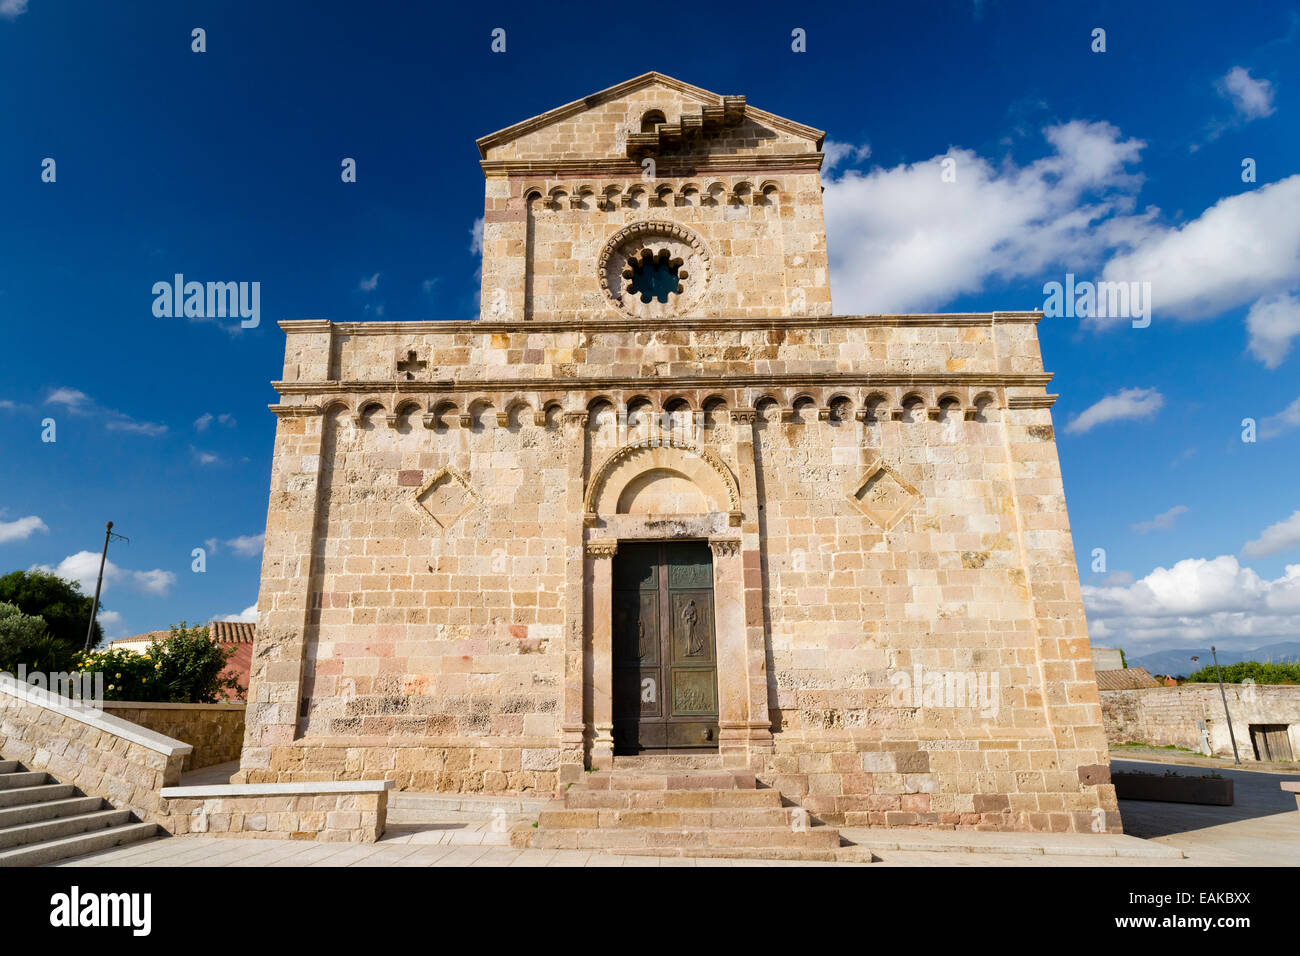 Romanesque-Pisan Cathedral of Santa Maria di Monserrato, consecrated in 1312, Sulcis, Sardinia, Italy Stock Photo